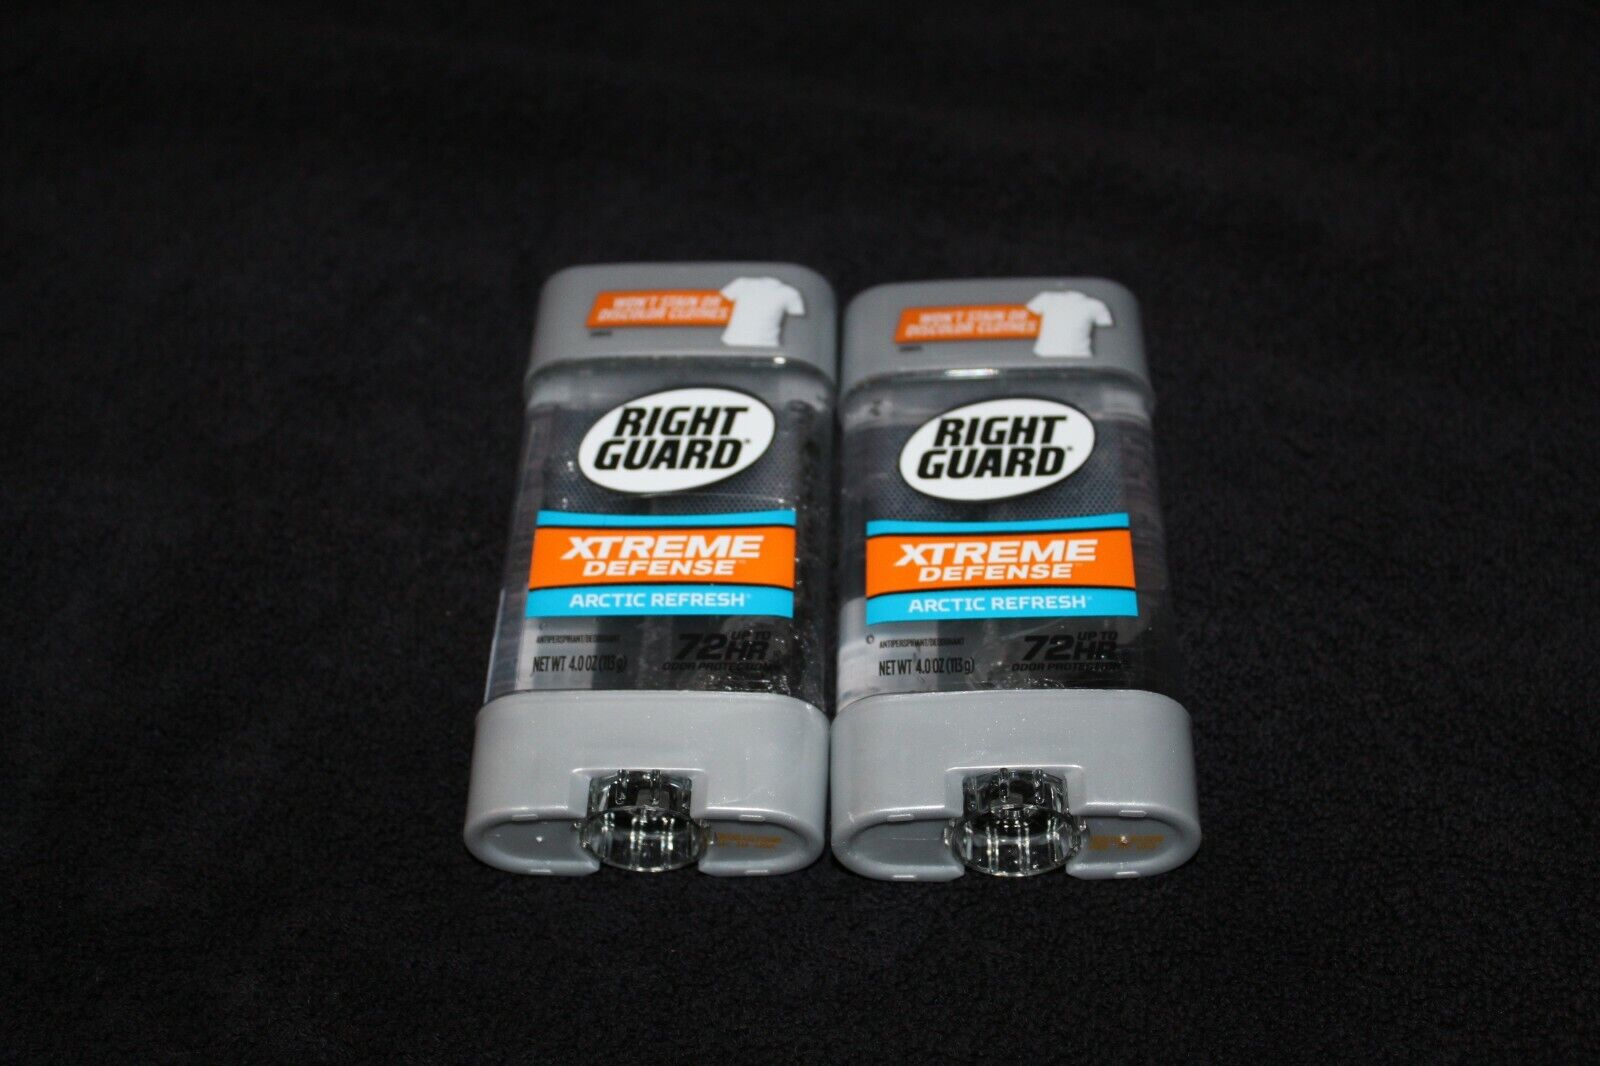 Lot of 2 Right Guard Xtreme Defense Antiperspirant/Deodorant ~ 4 oz. $10.95